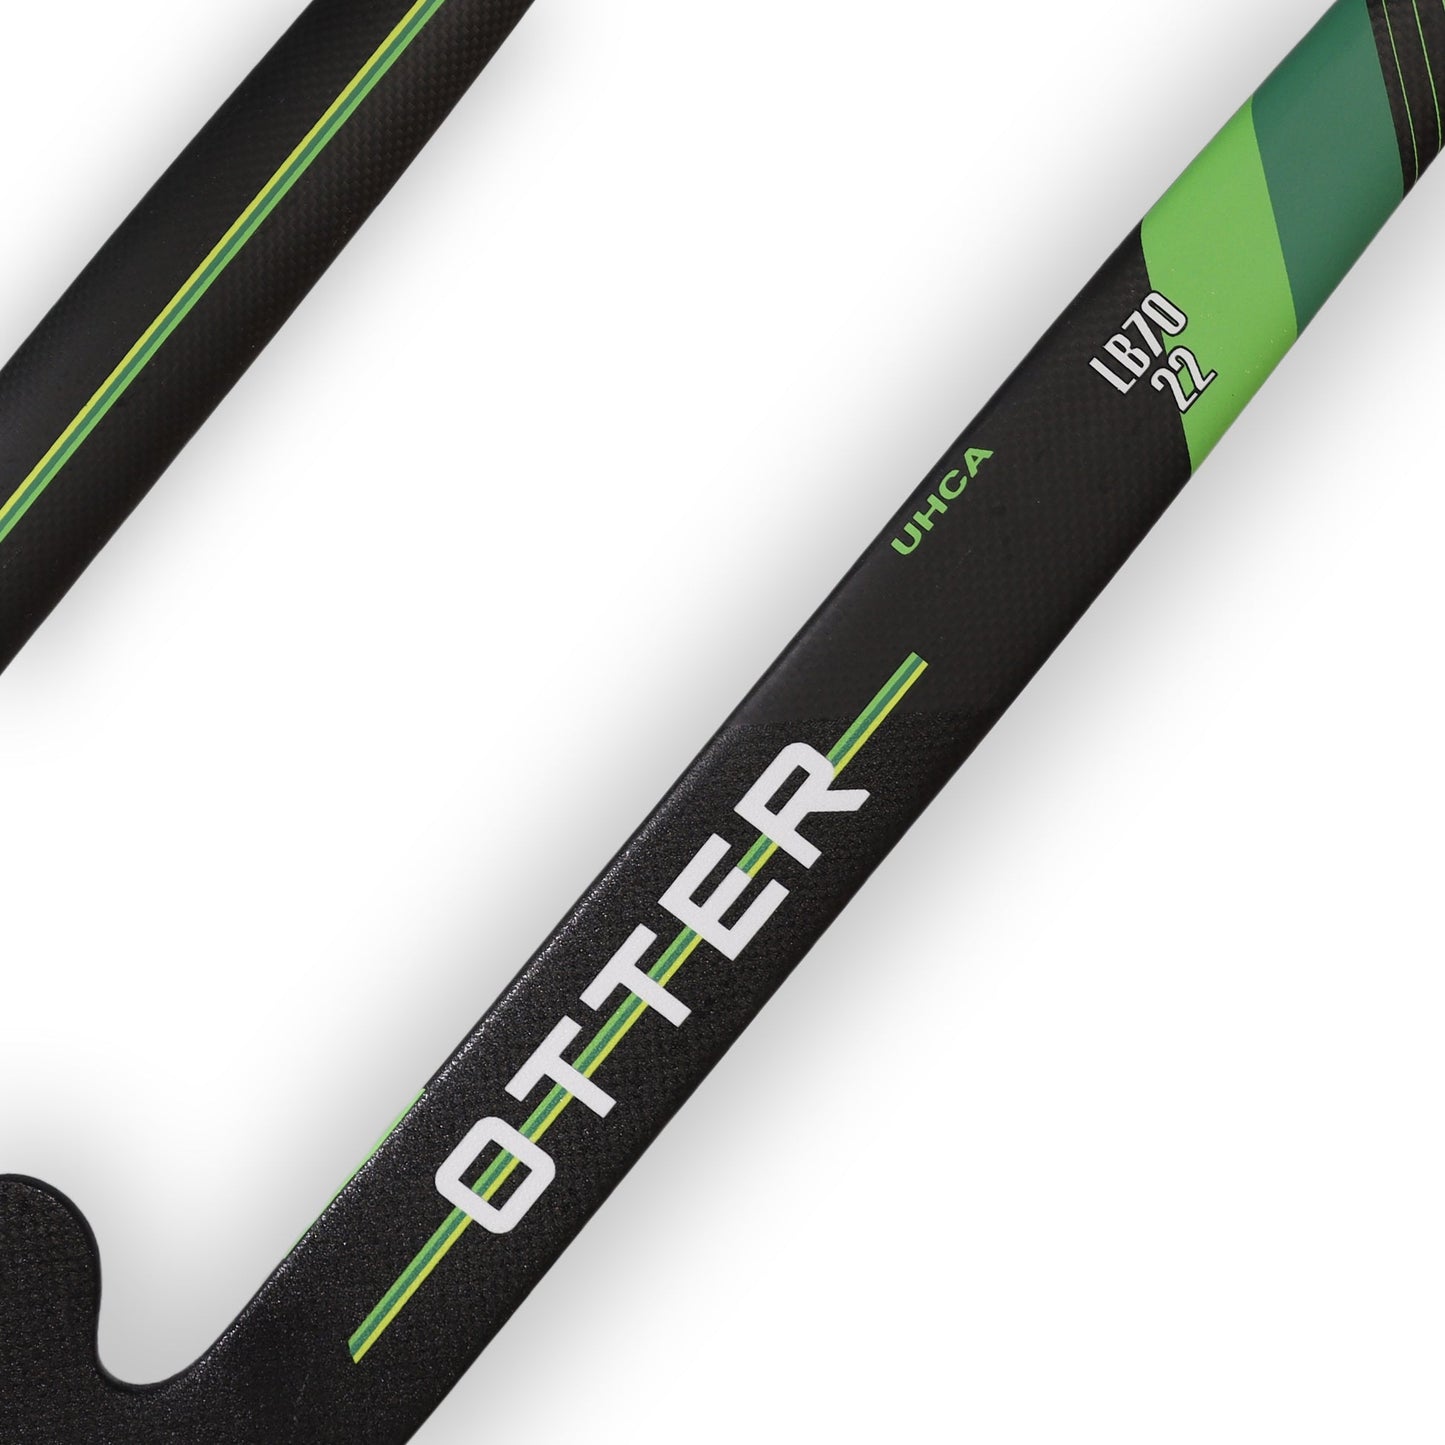 Otter Hockey Stick LB70 - 7/10 Power Rating